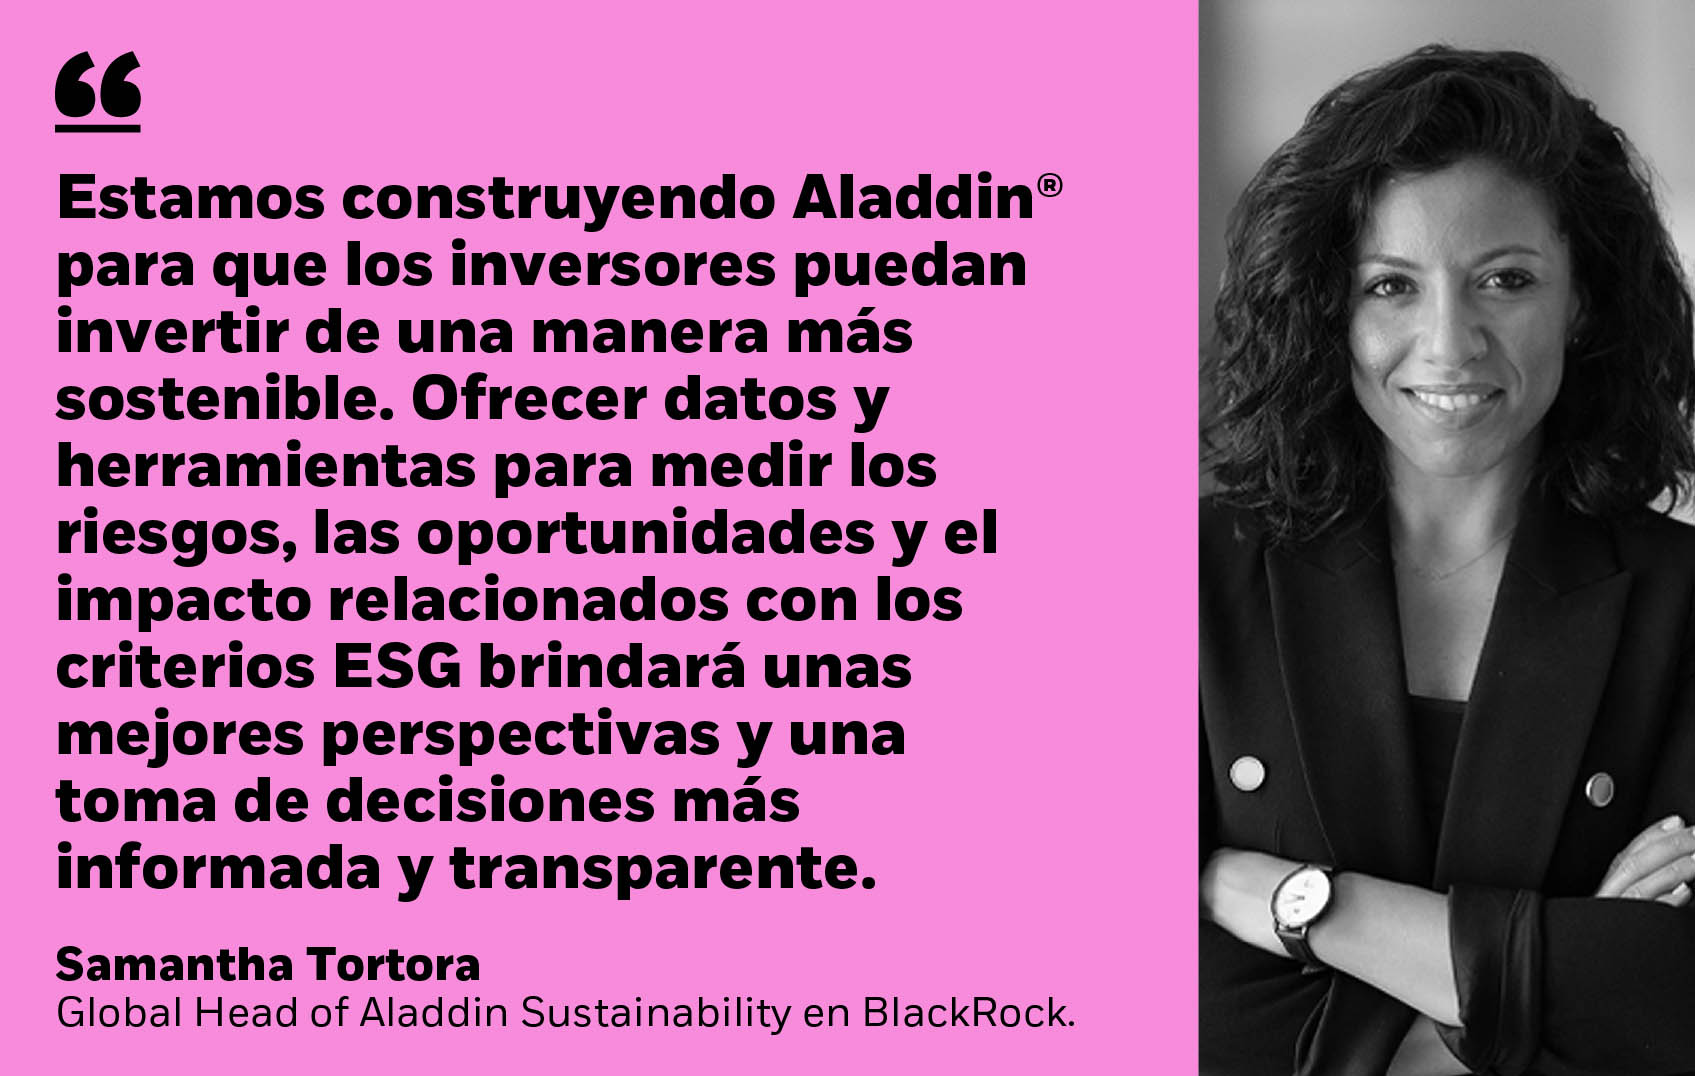 Samantha Tortora, Global Head of Aladdin Sustainability en BlackRock